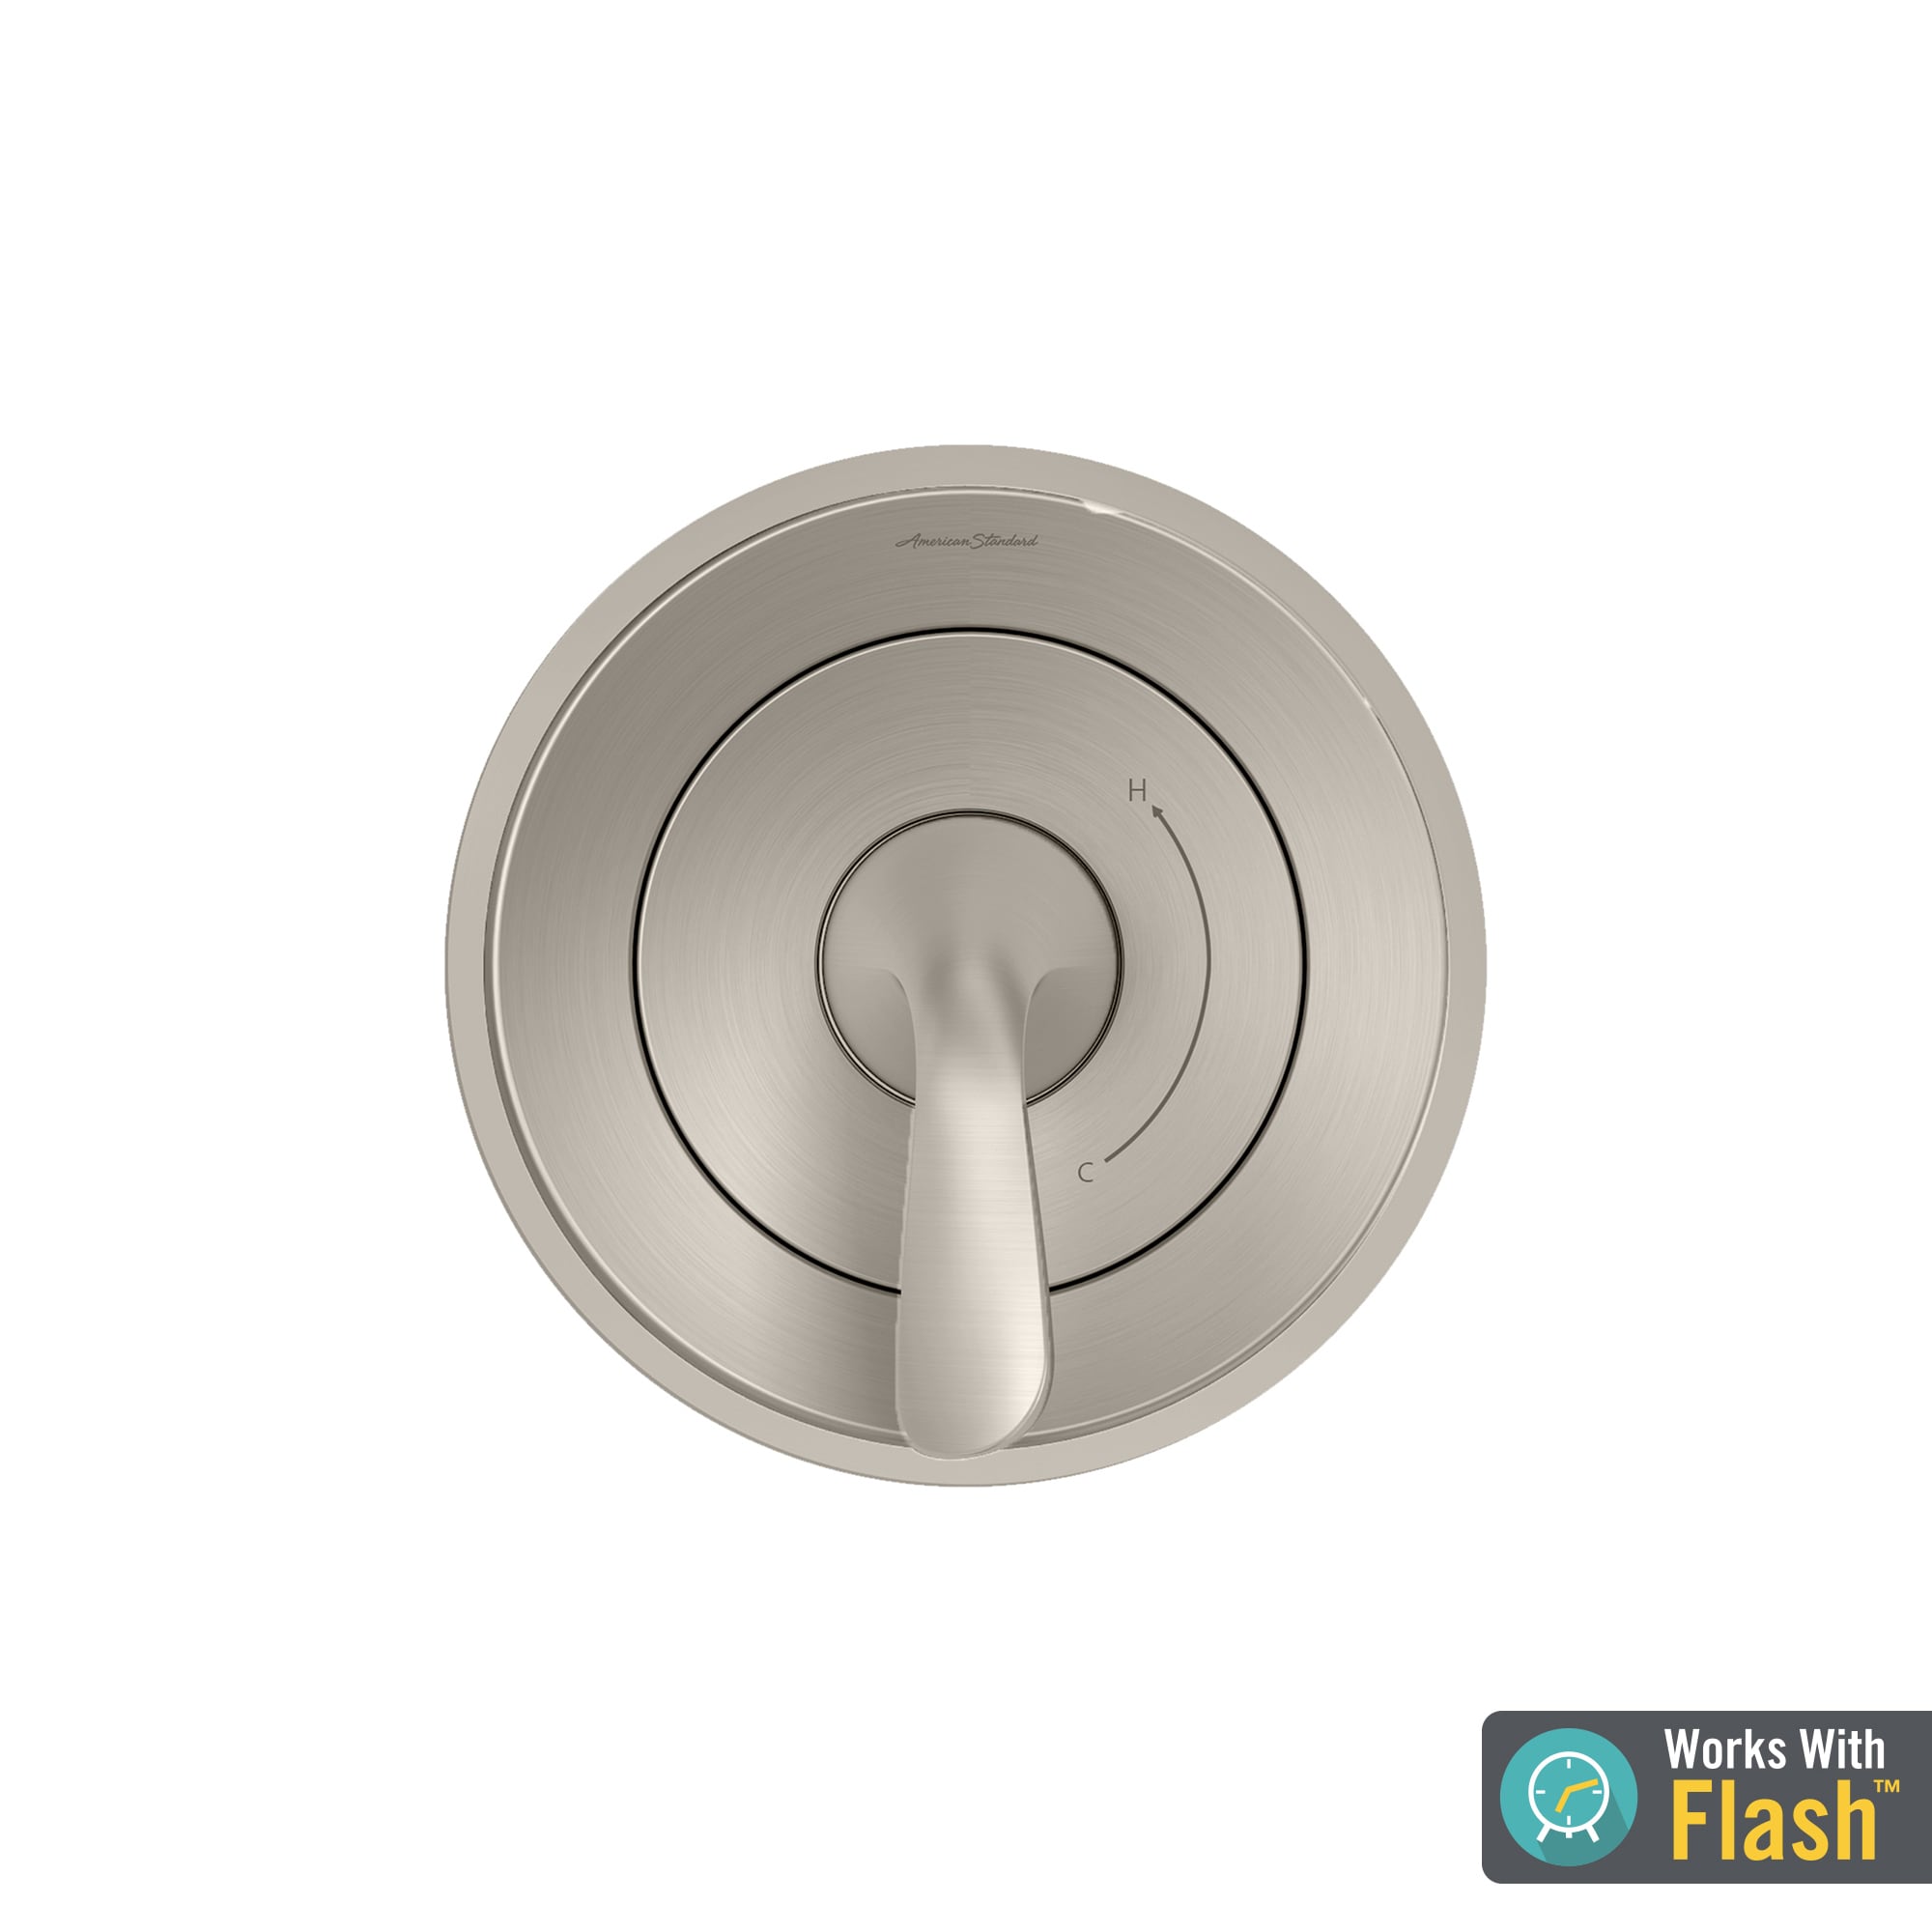 American Standard Fluent Brushed Nickel 1-handle Shower Faucet